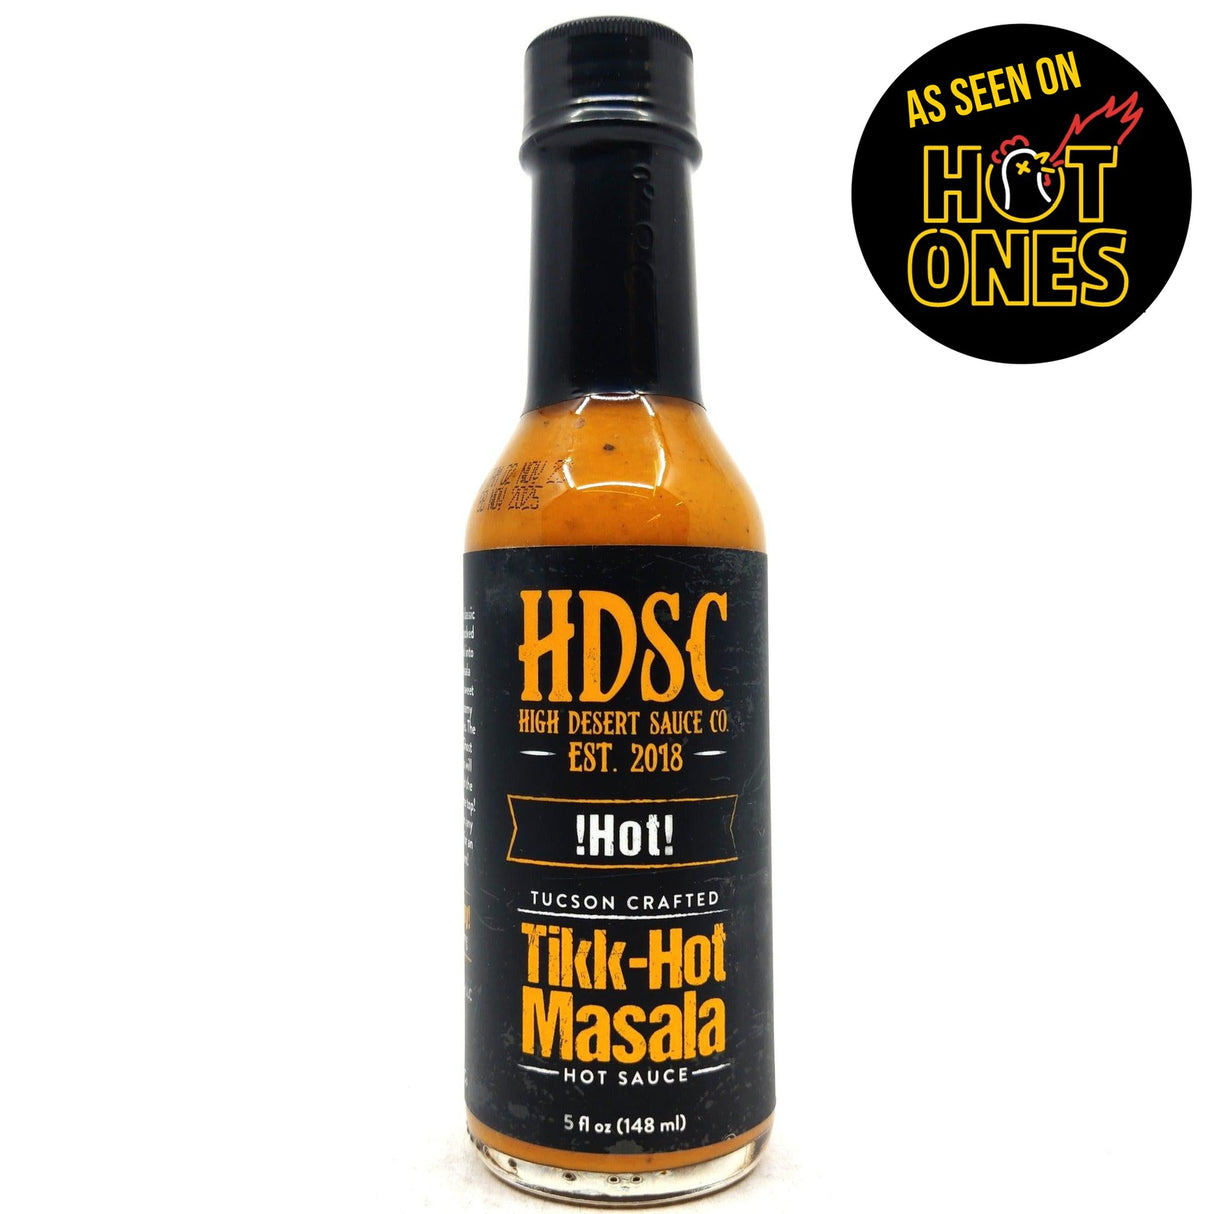 High Desert Sauce Co Tikk-Hot Masala Hot Sauce (148ml)-Hop Burns & Black